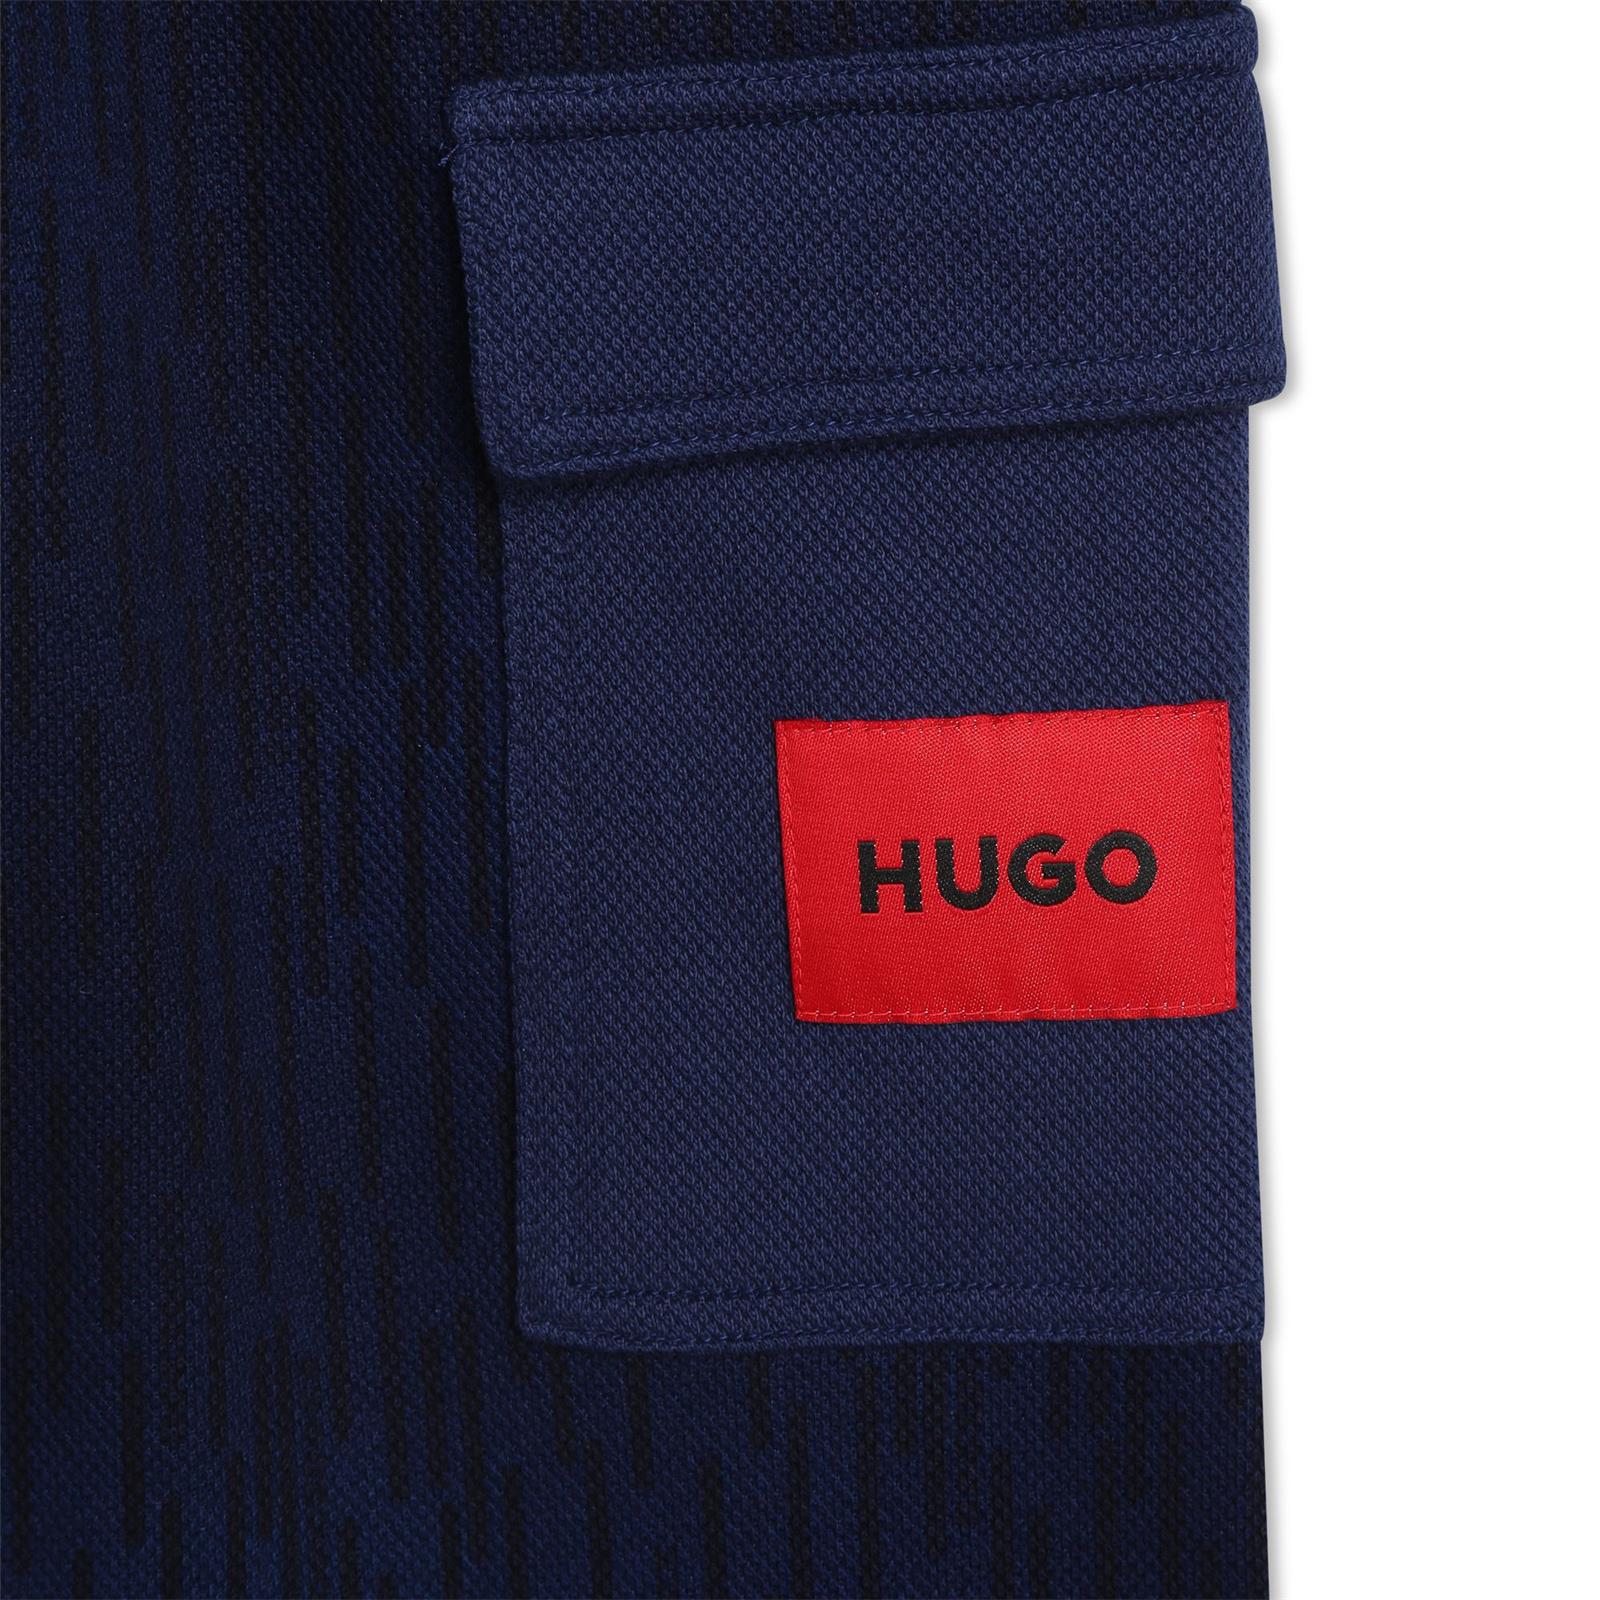 Hugo Navy Sweatpants